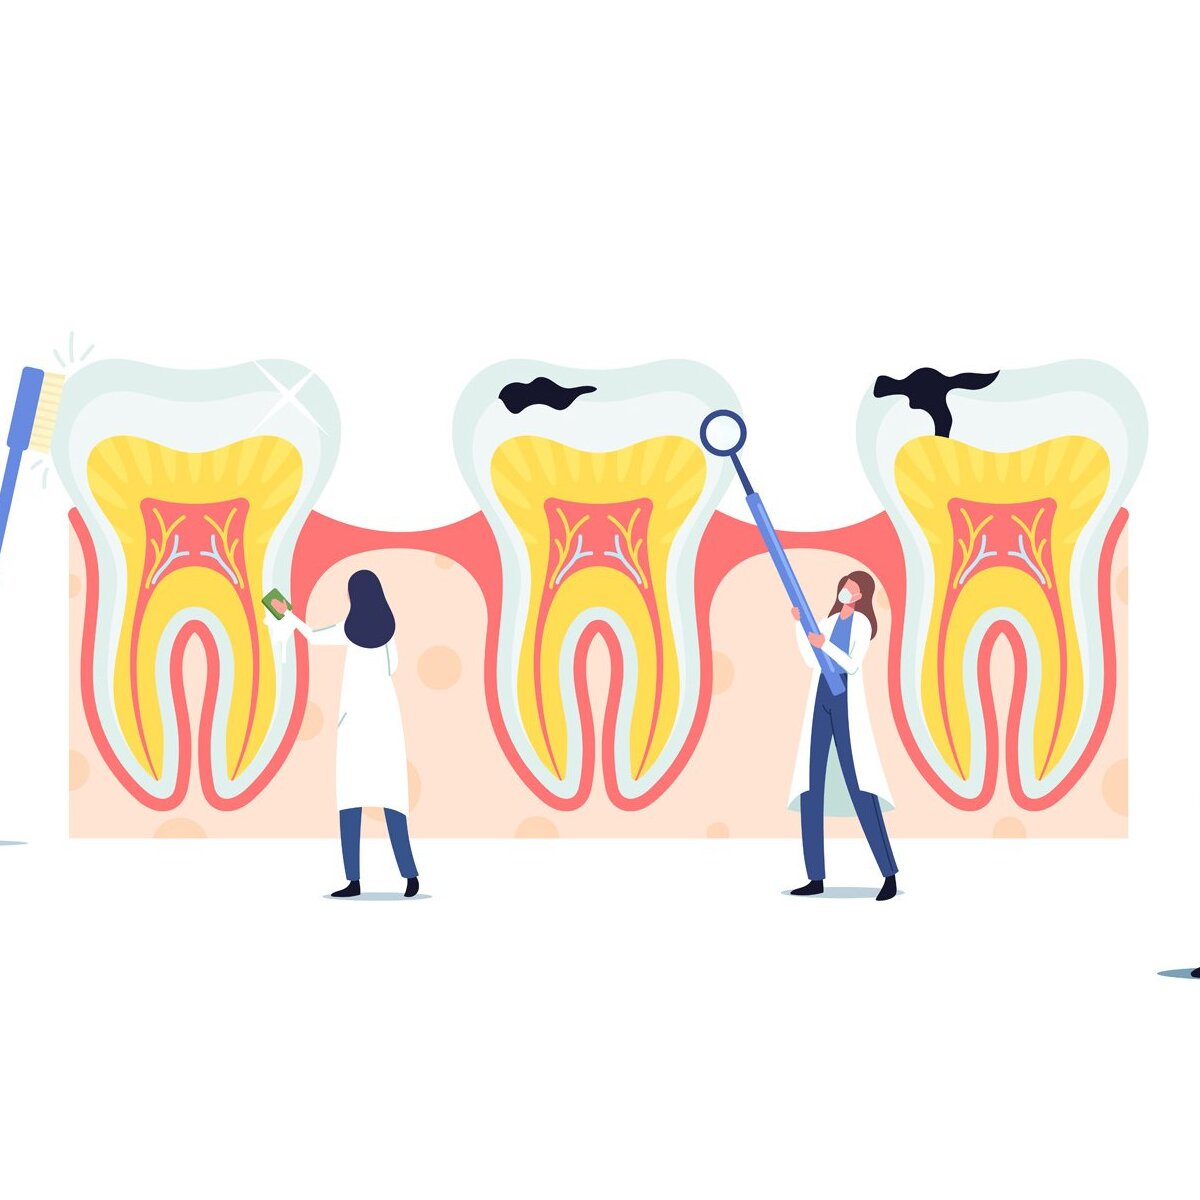 Stomatology, Dentistry Concept. Tiny.